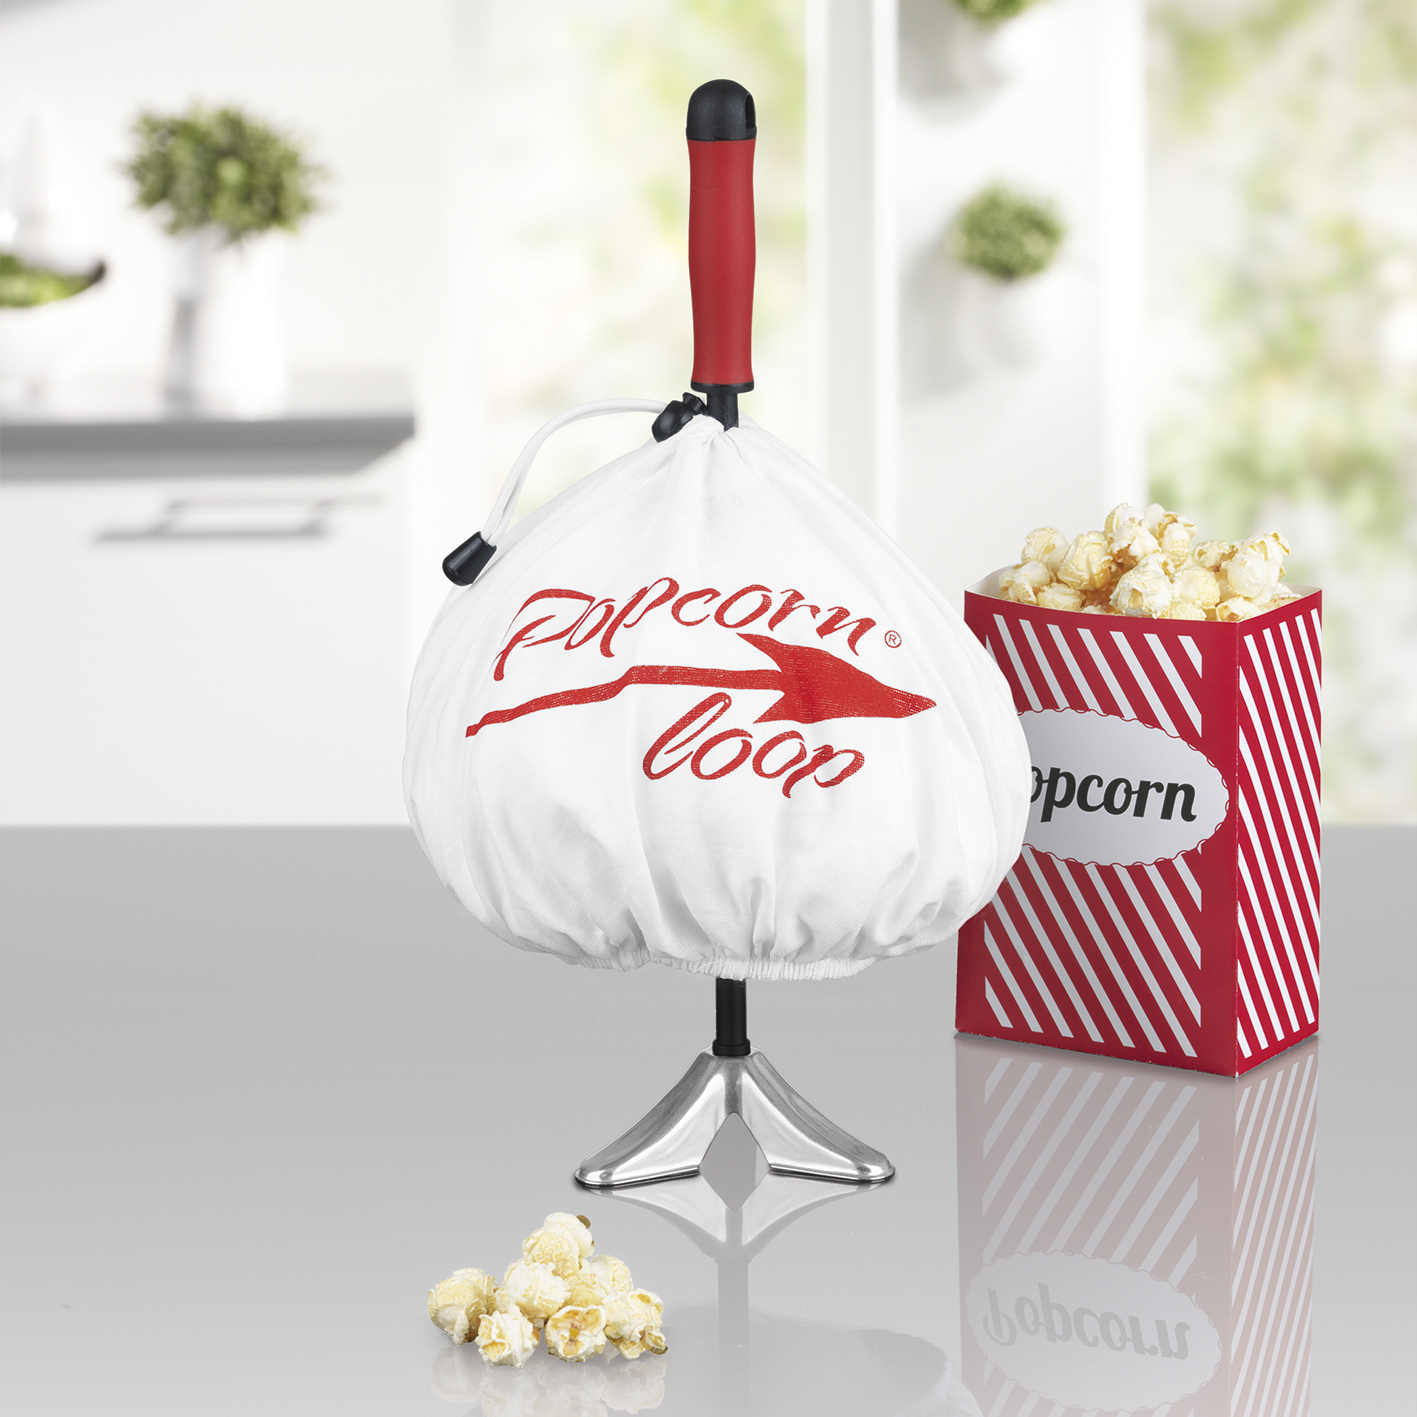 Das Original 04021 Popcornmaschine popcornloop